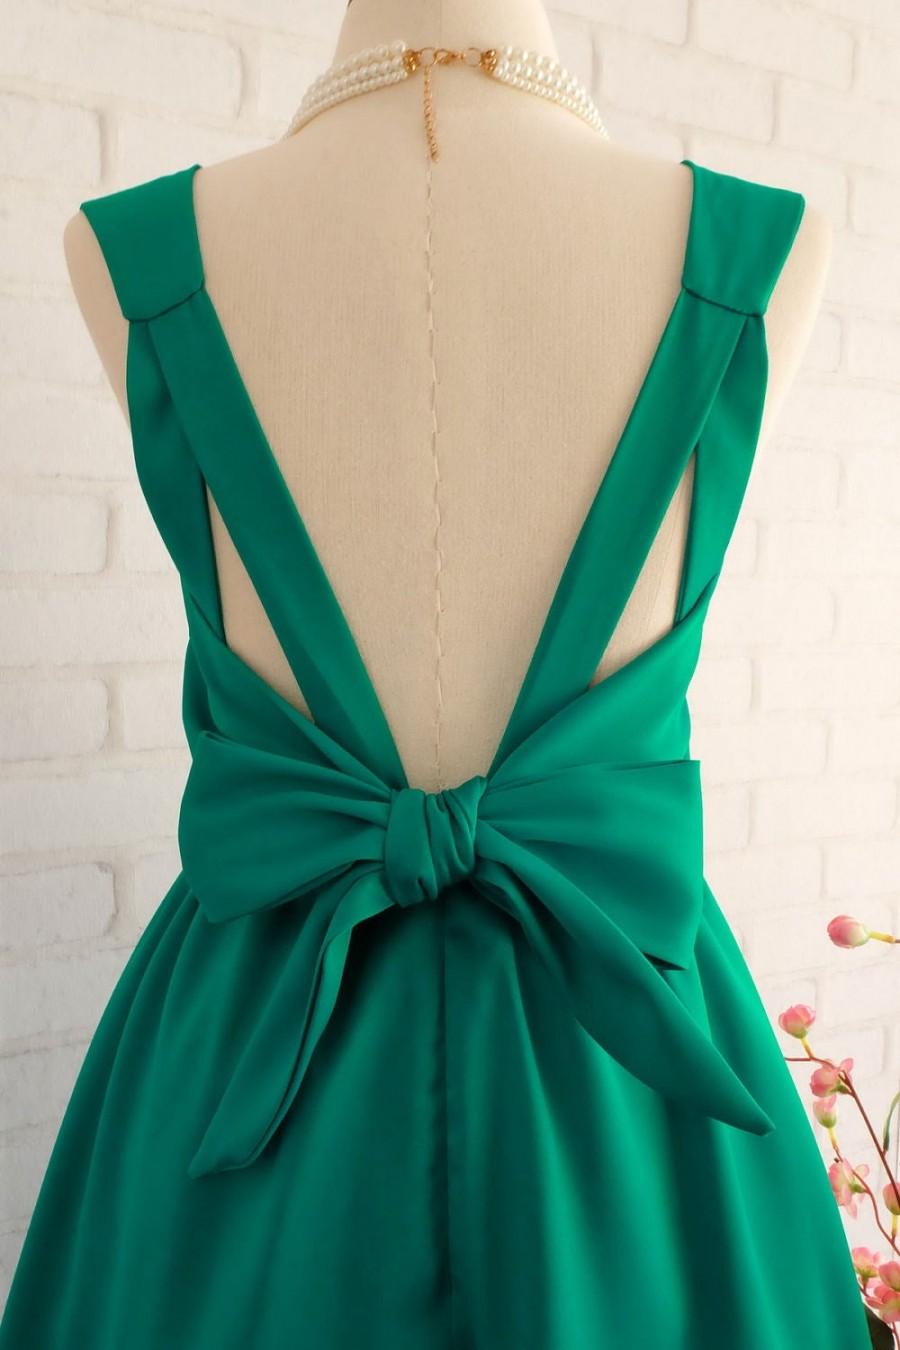 Mariage - Emerald Green dress green Bridesmaid dress Wedding Prom dress Cocktail Party dress Evening dress Backless bow dress